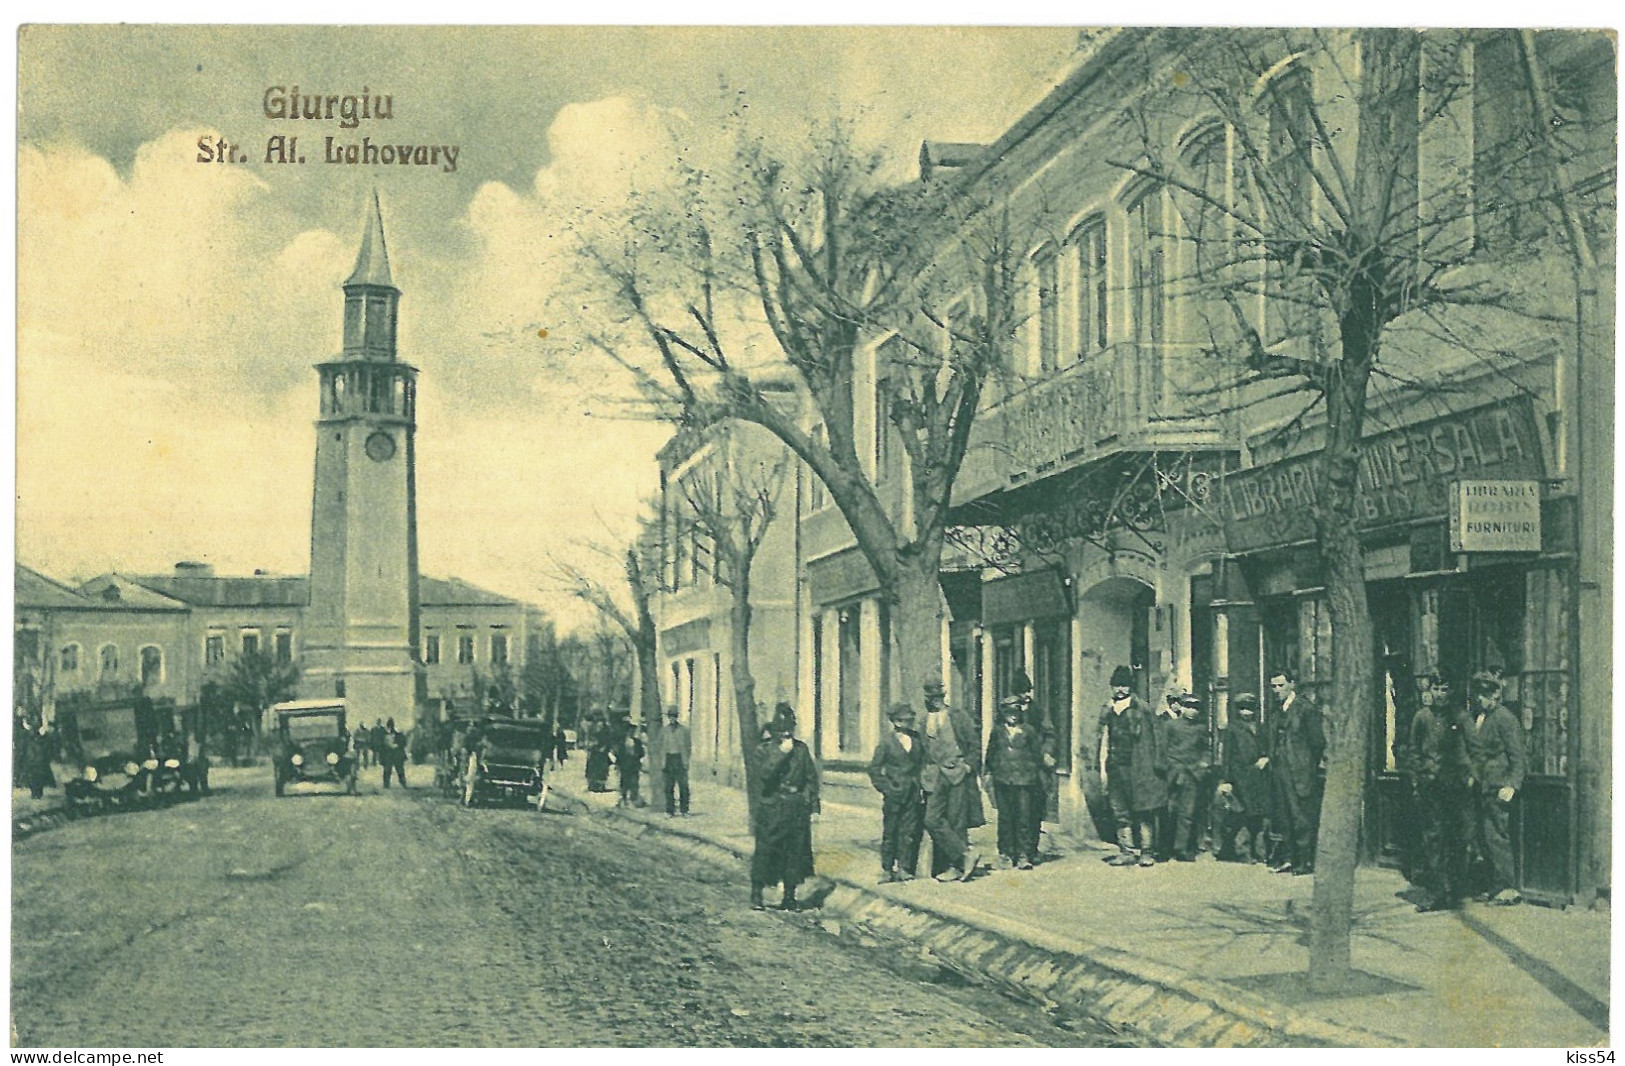 RO 83 - 23689 GIURGIU, Firemen Tower, Stret Stores, Romania - Old Postcard - Used - 1928 - Roemenië